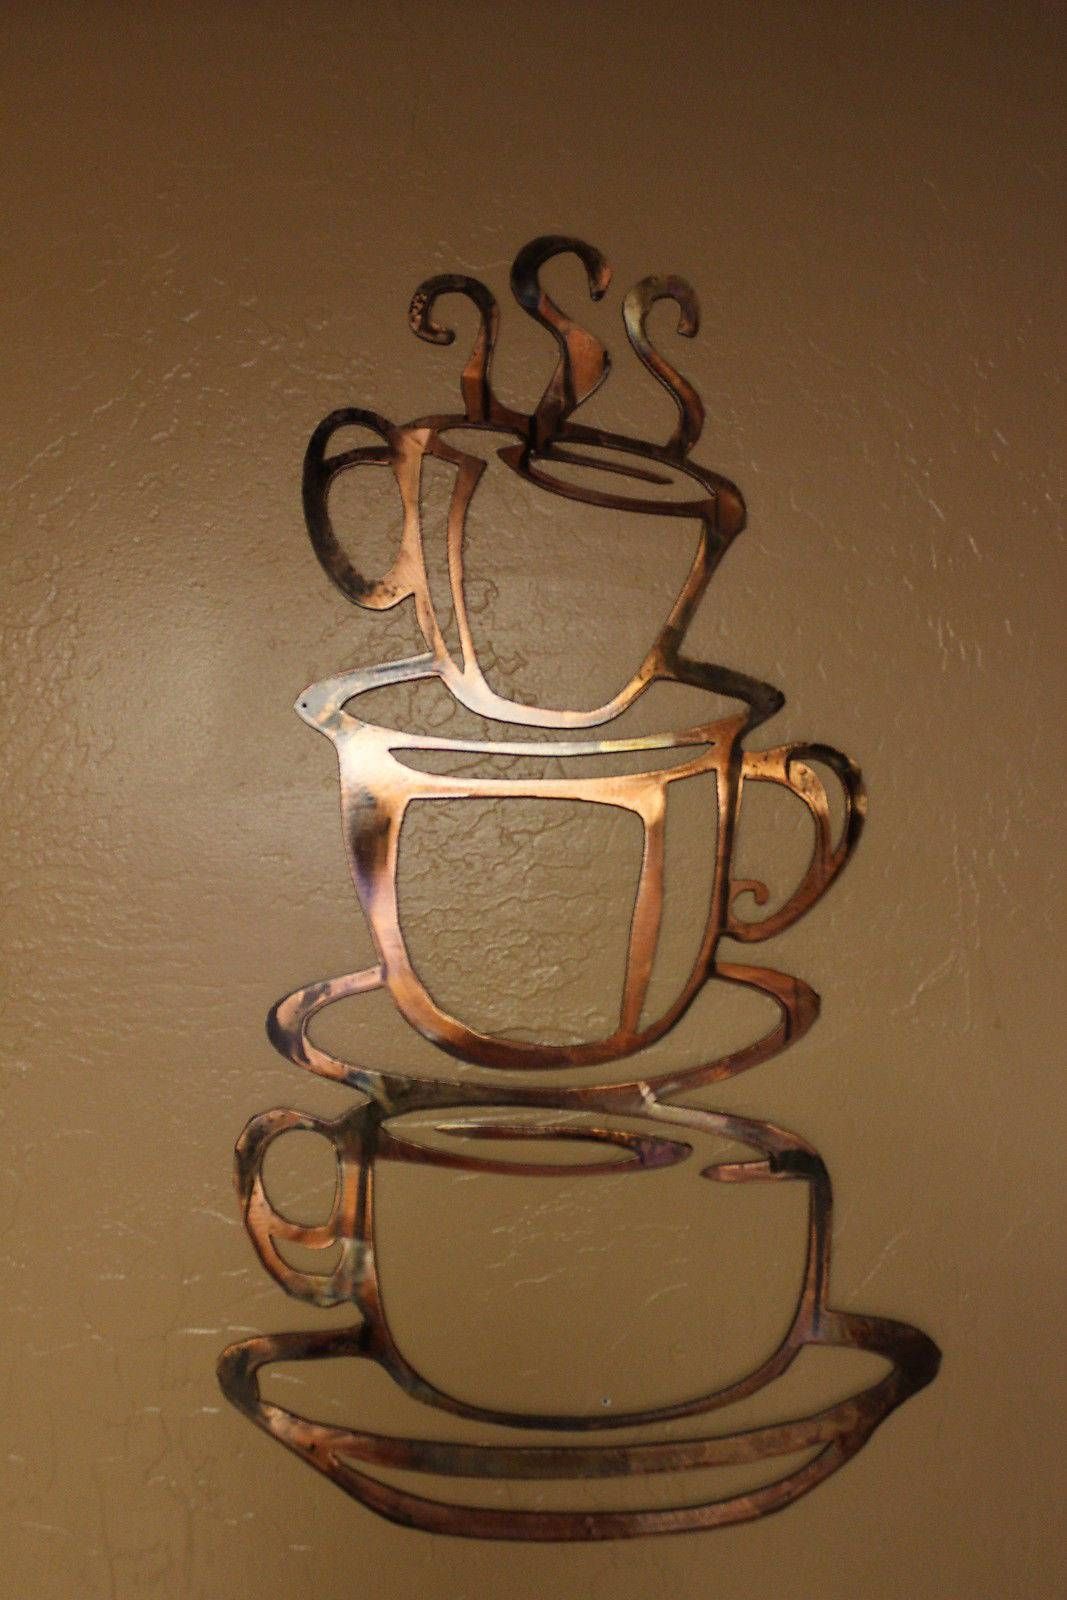 Sweet Design Coffee Metal Wall Art Themed Pot Cups Decor Cup Regarding Most Popular Coffee Metal Wall Art (View 9 of 20)